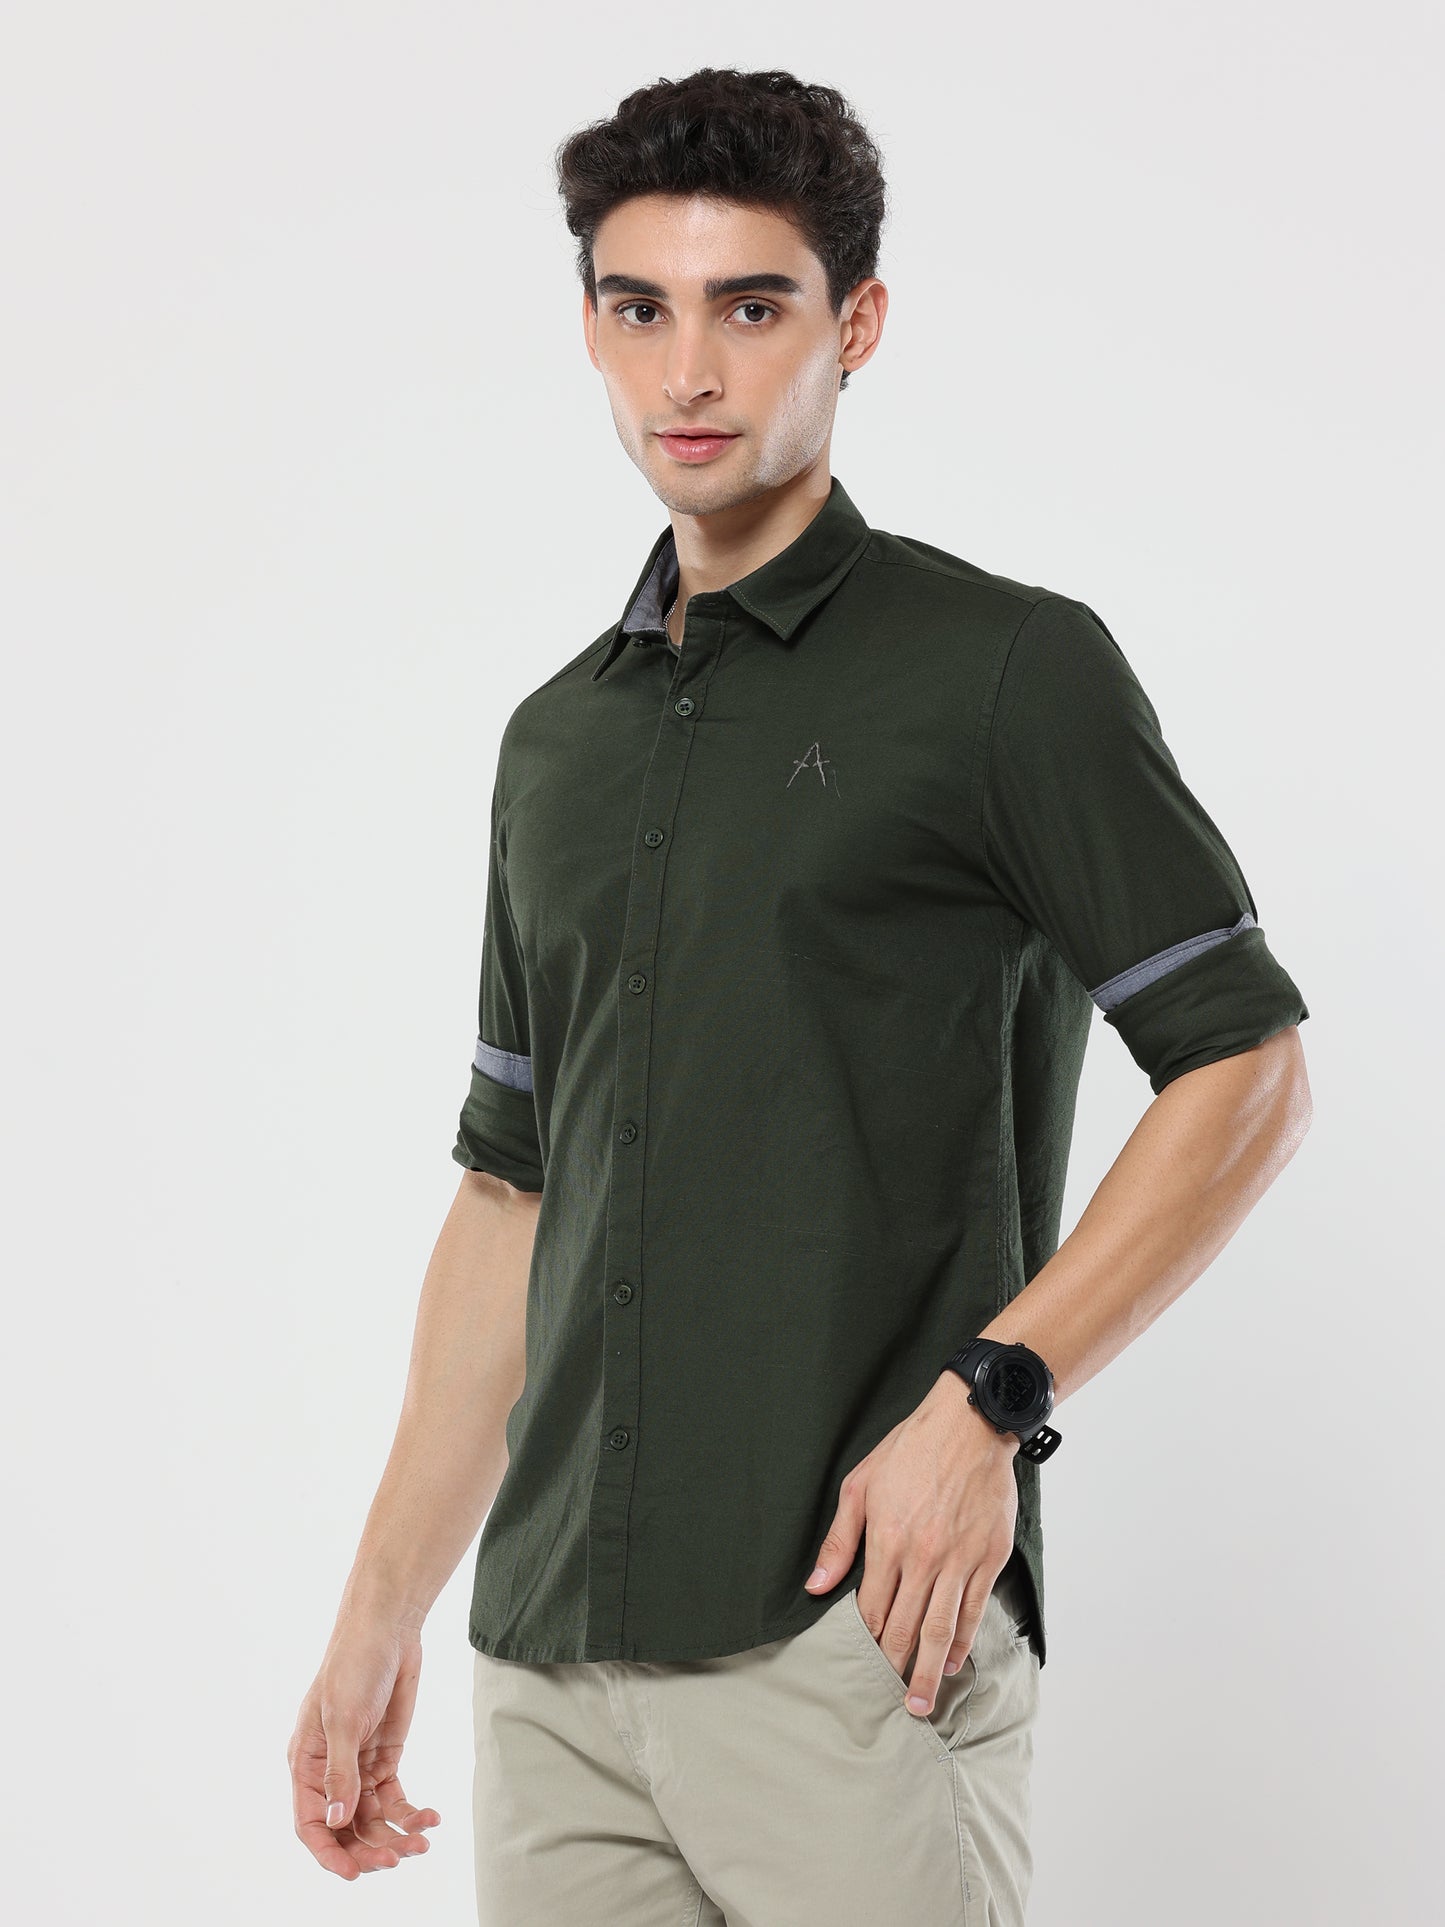 Military Green Plain Premium Cotton Oxford Shirt For Men